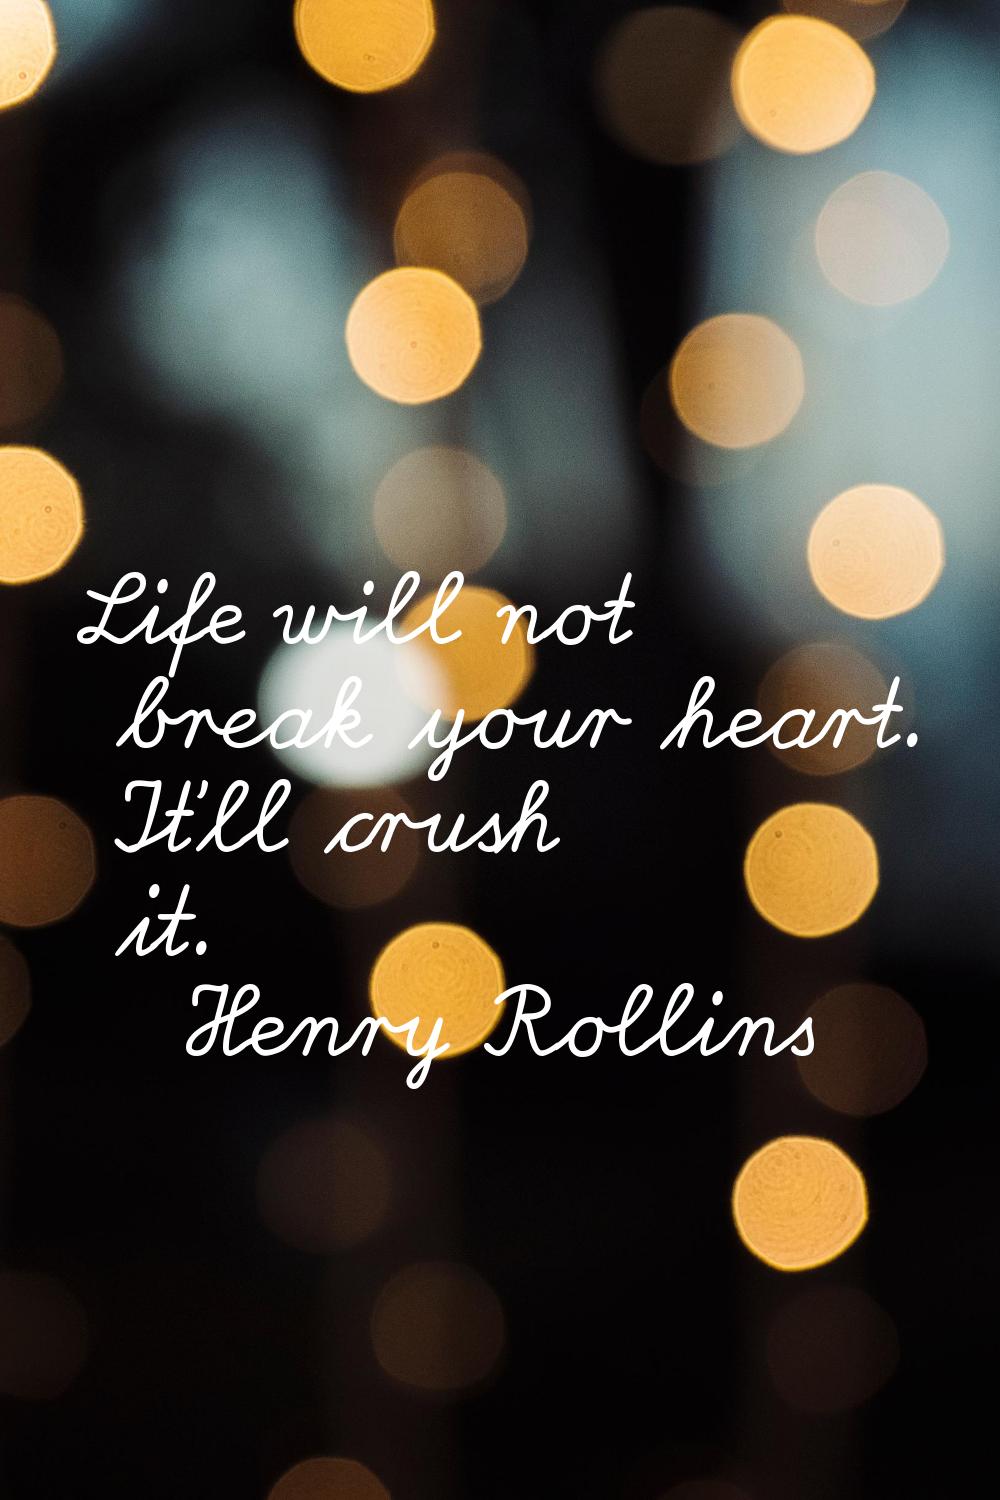 Life will not break your heart. It'll crush it.